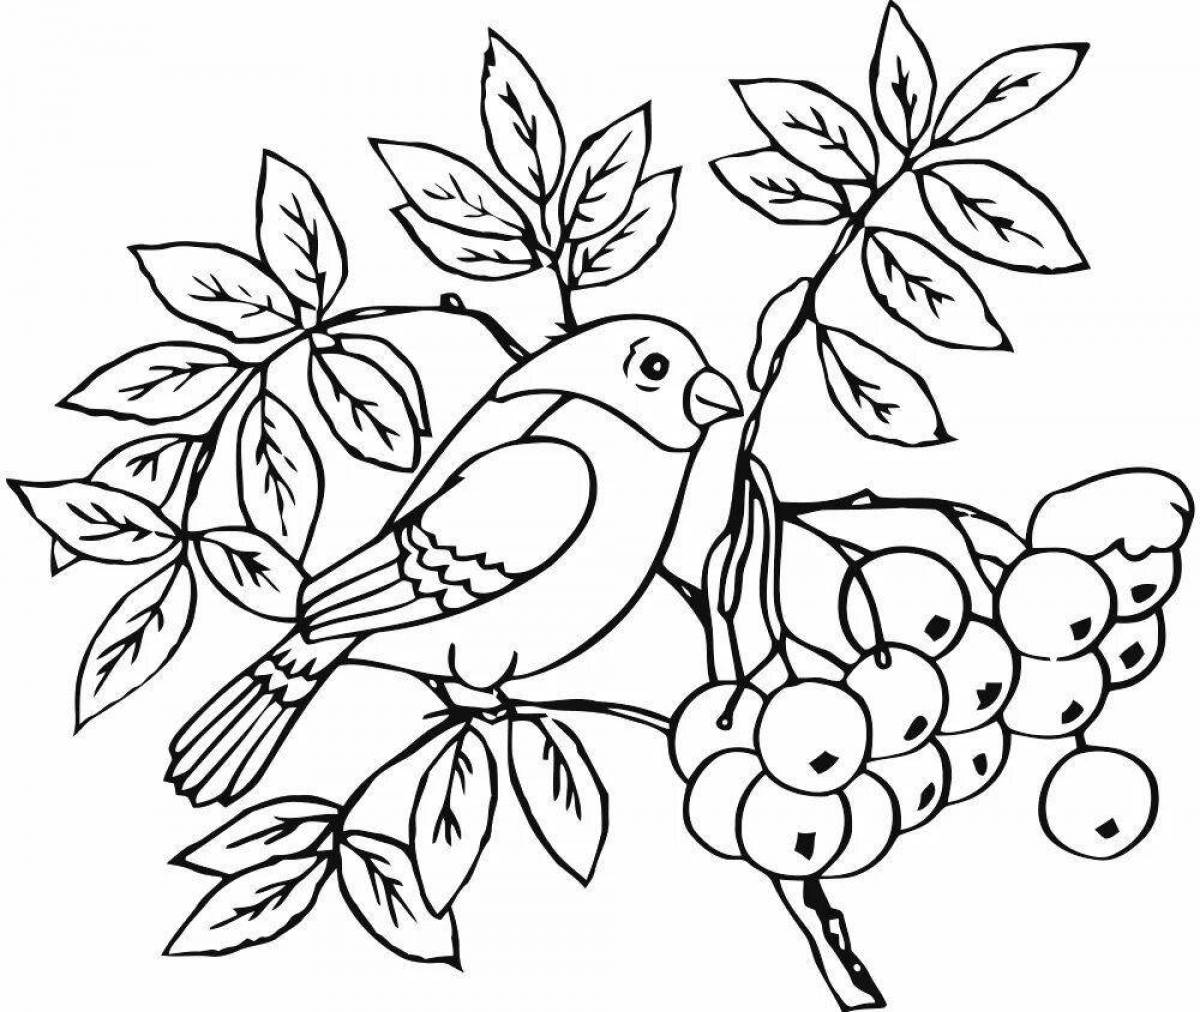 Perky bird on a branch